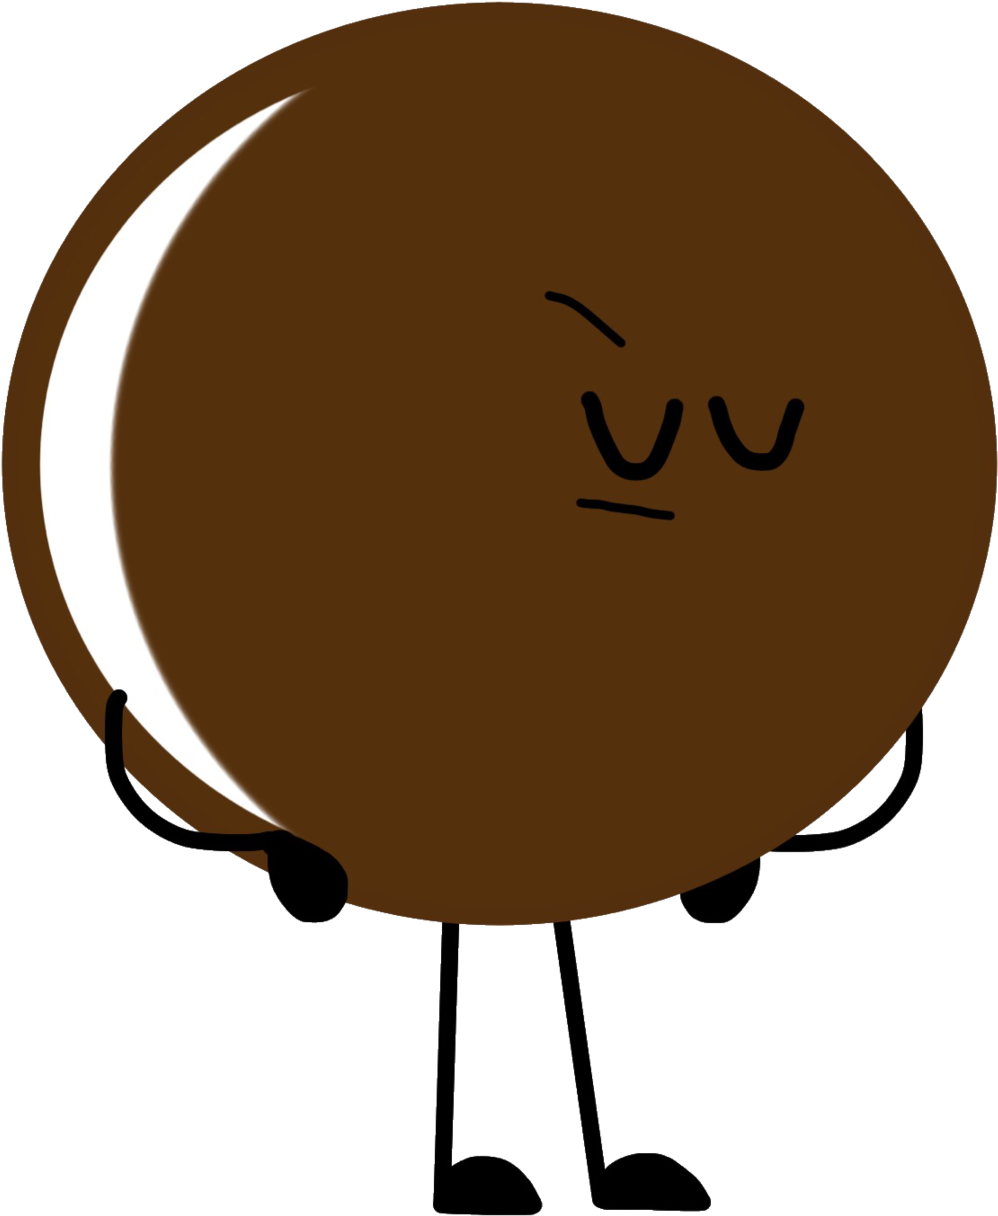 It's Chocolate Chip Oreo Not Cookie By Ball Of Sugar - Chocolate Ball Cartoon (1024x1253)